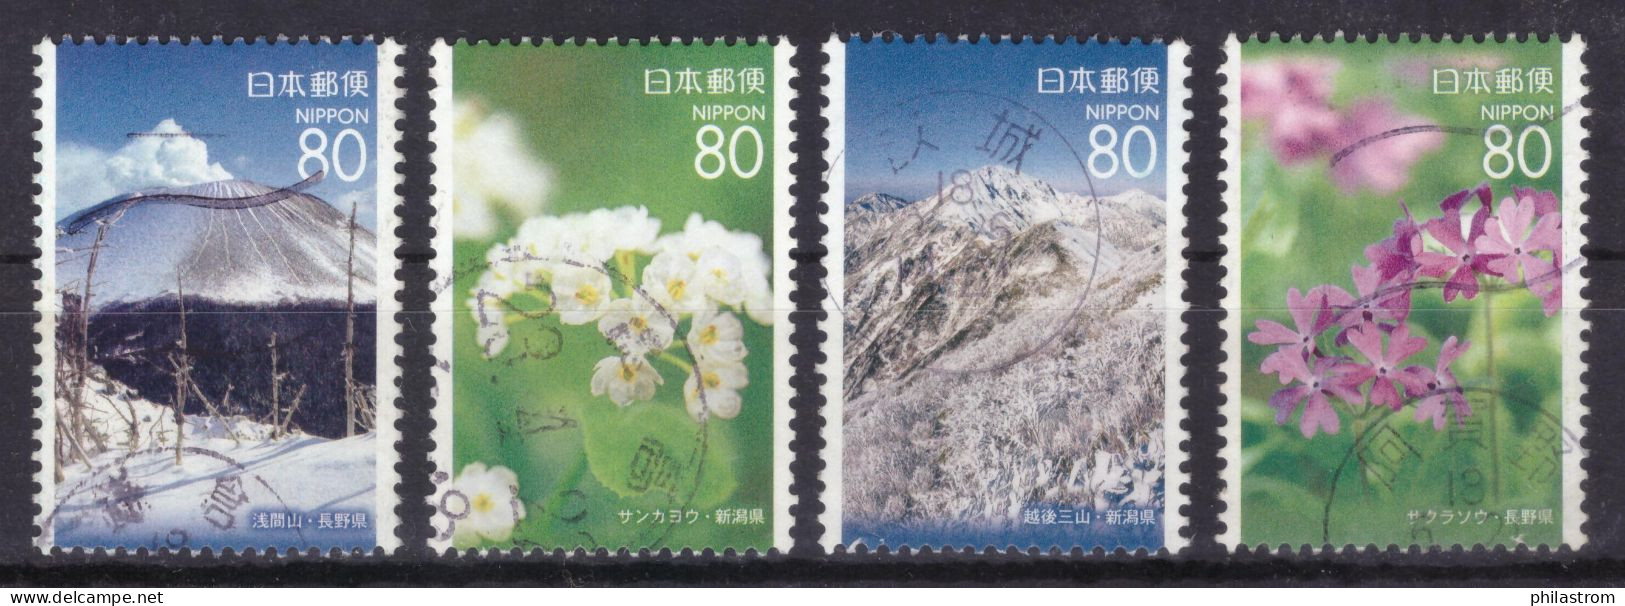 Japan - Used - 2006 - Nature Of Shinetsu Nigata Nagano - Flora  Flowers Mountains - (NPPN-0611) - Usati